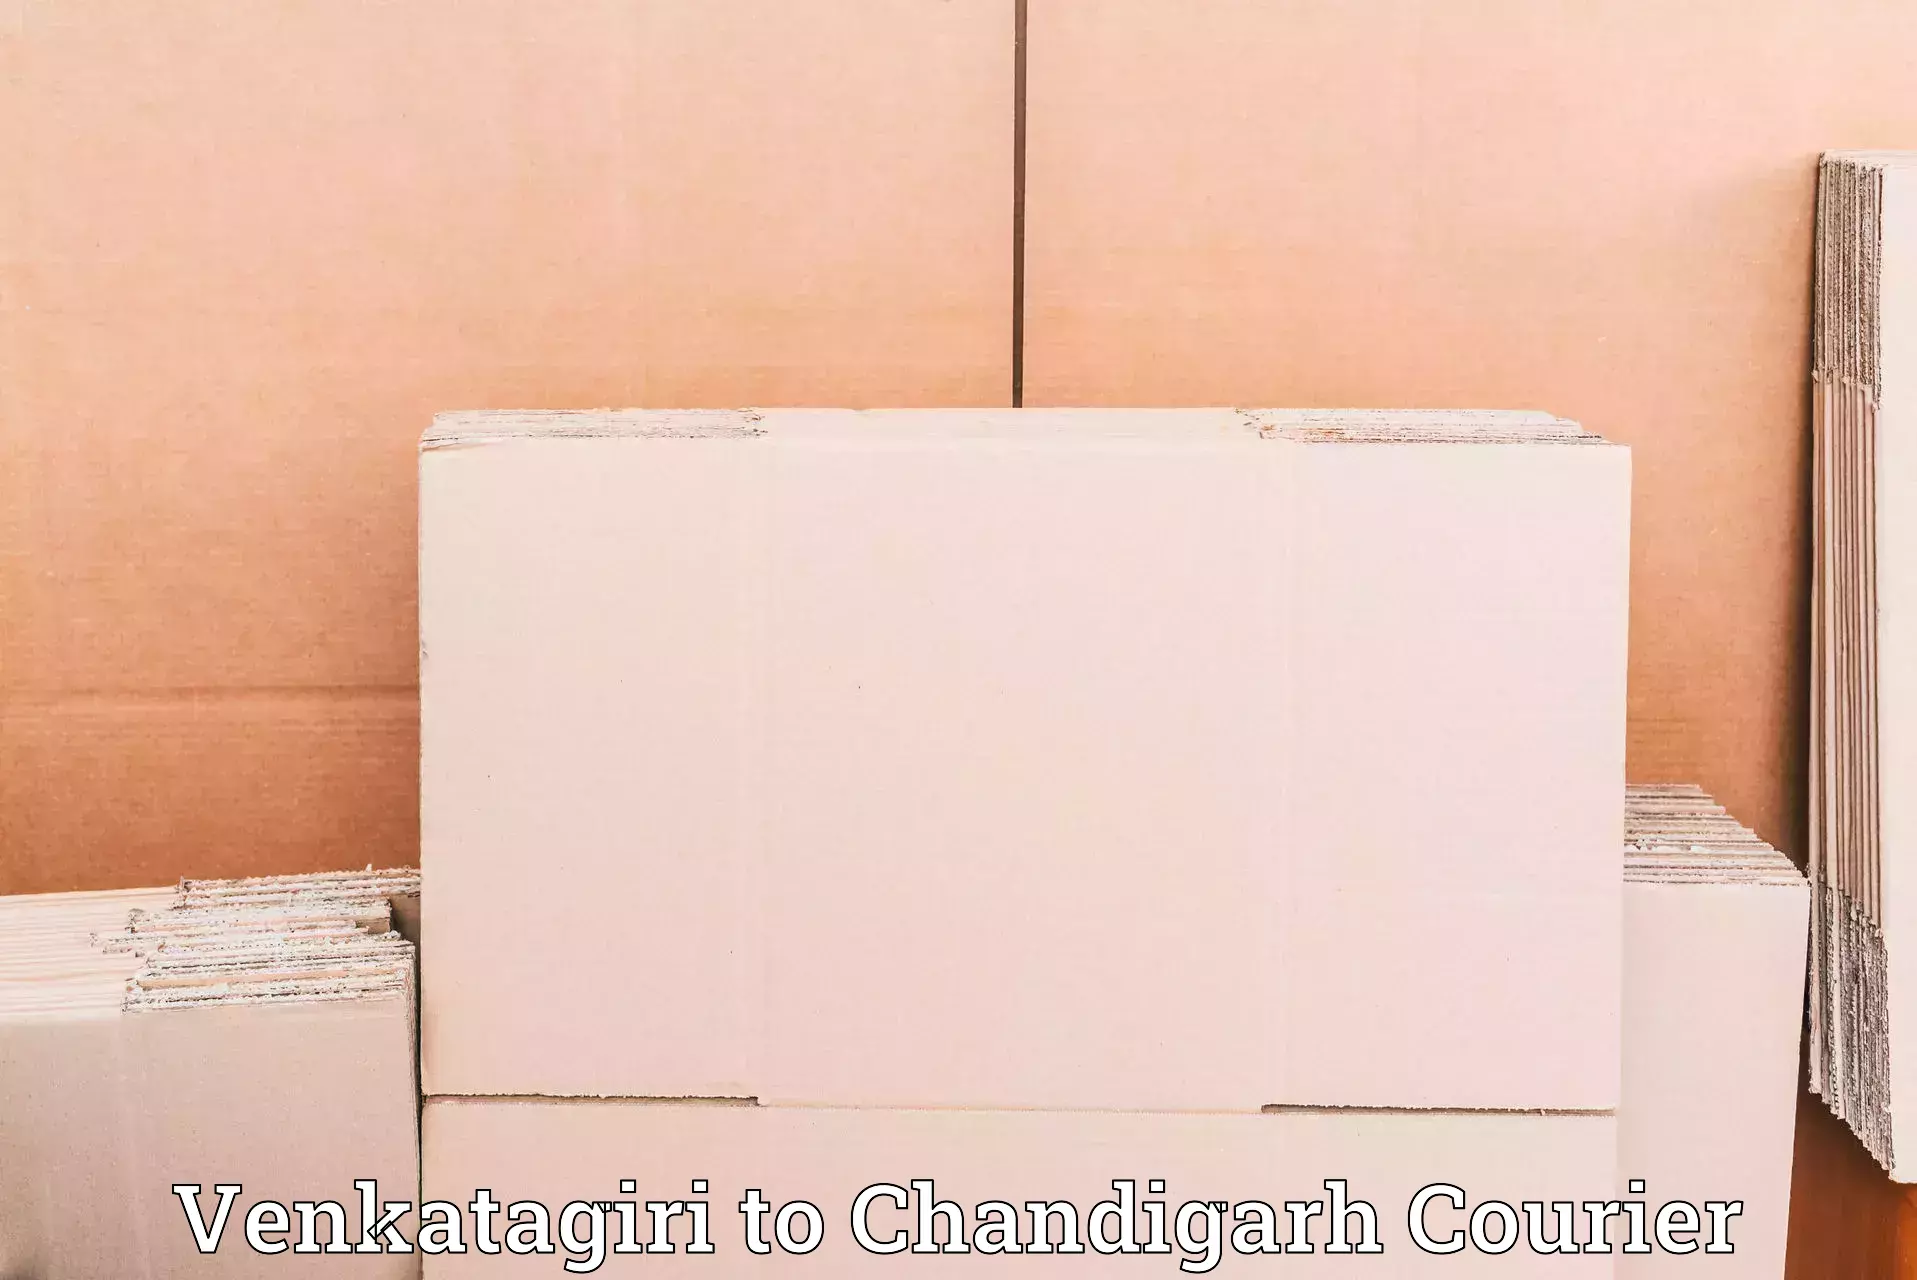 Courier service innovation Venkatagiri to Chandigarh